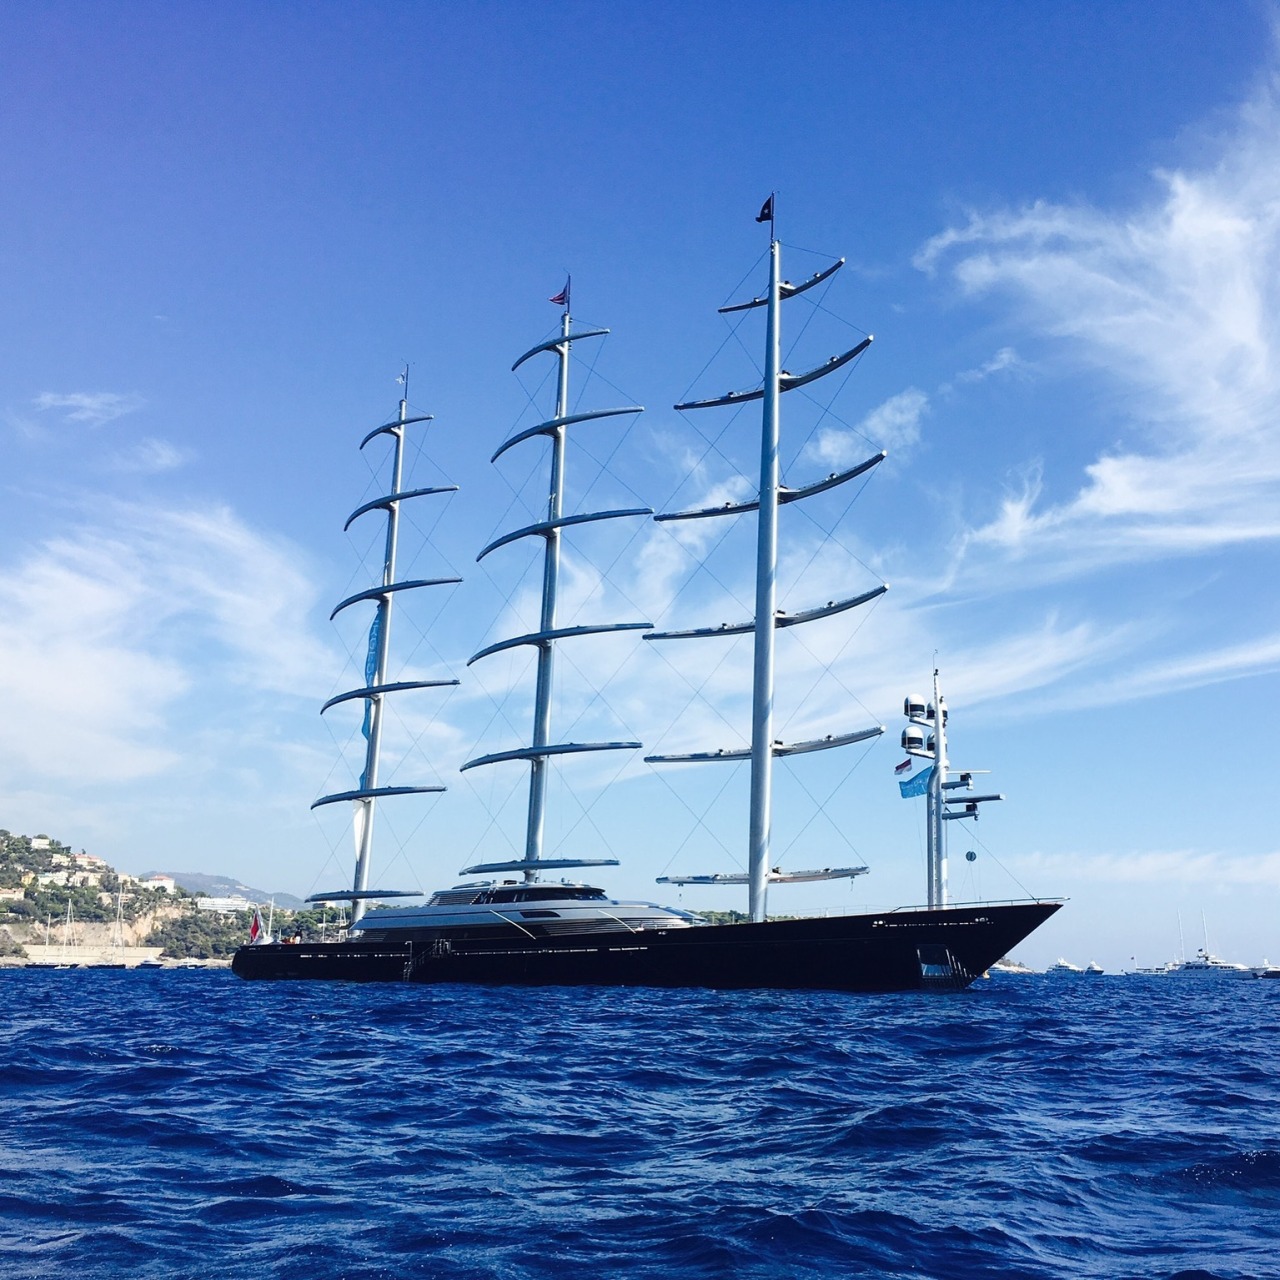 bespokeyachtcharter:
“The legendary sailing yacht MALTESE FALCON looking resplendent at the 2016 Monaco Yacht Show!
”